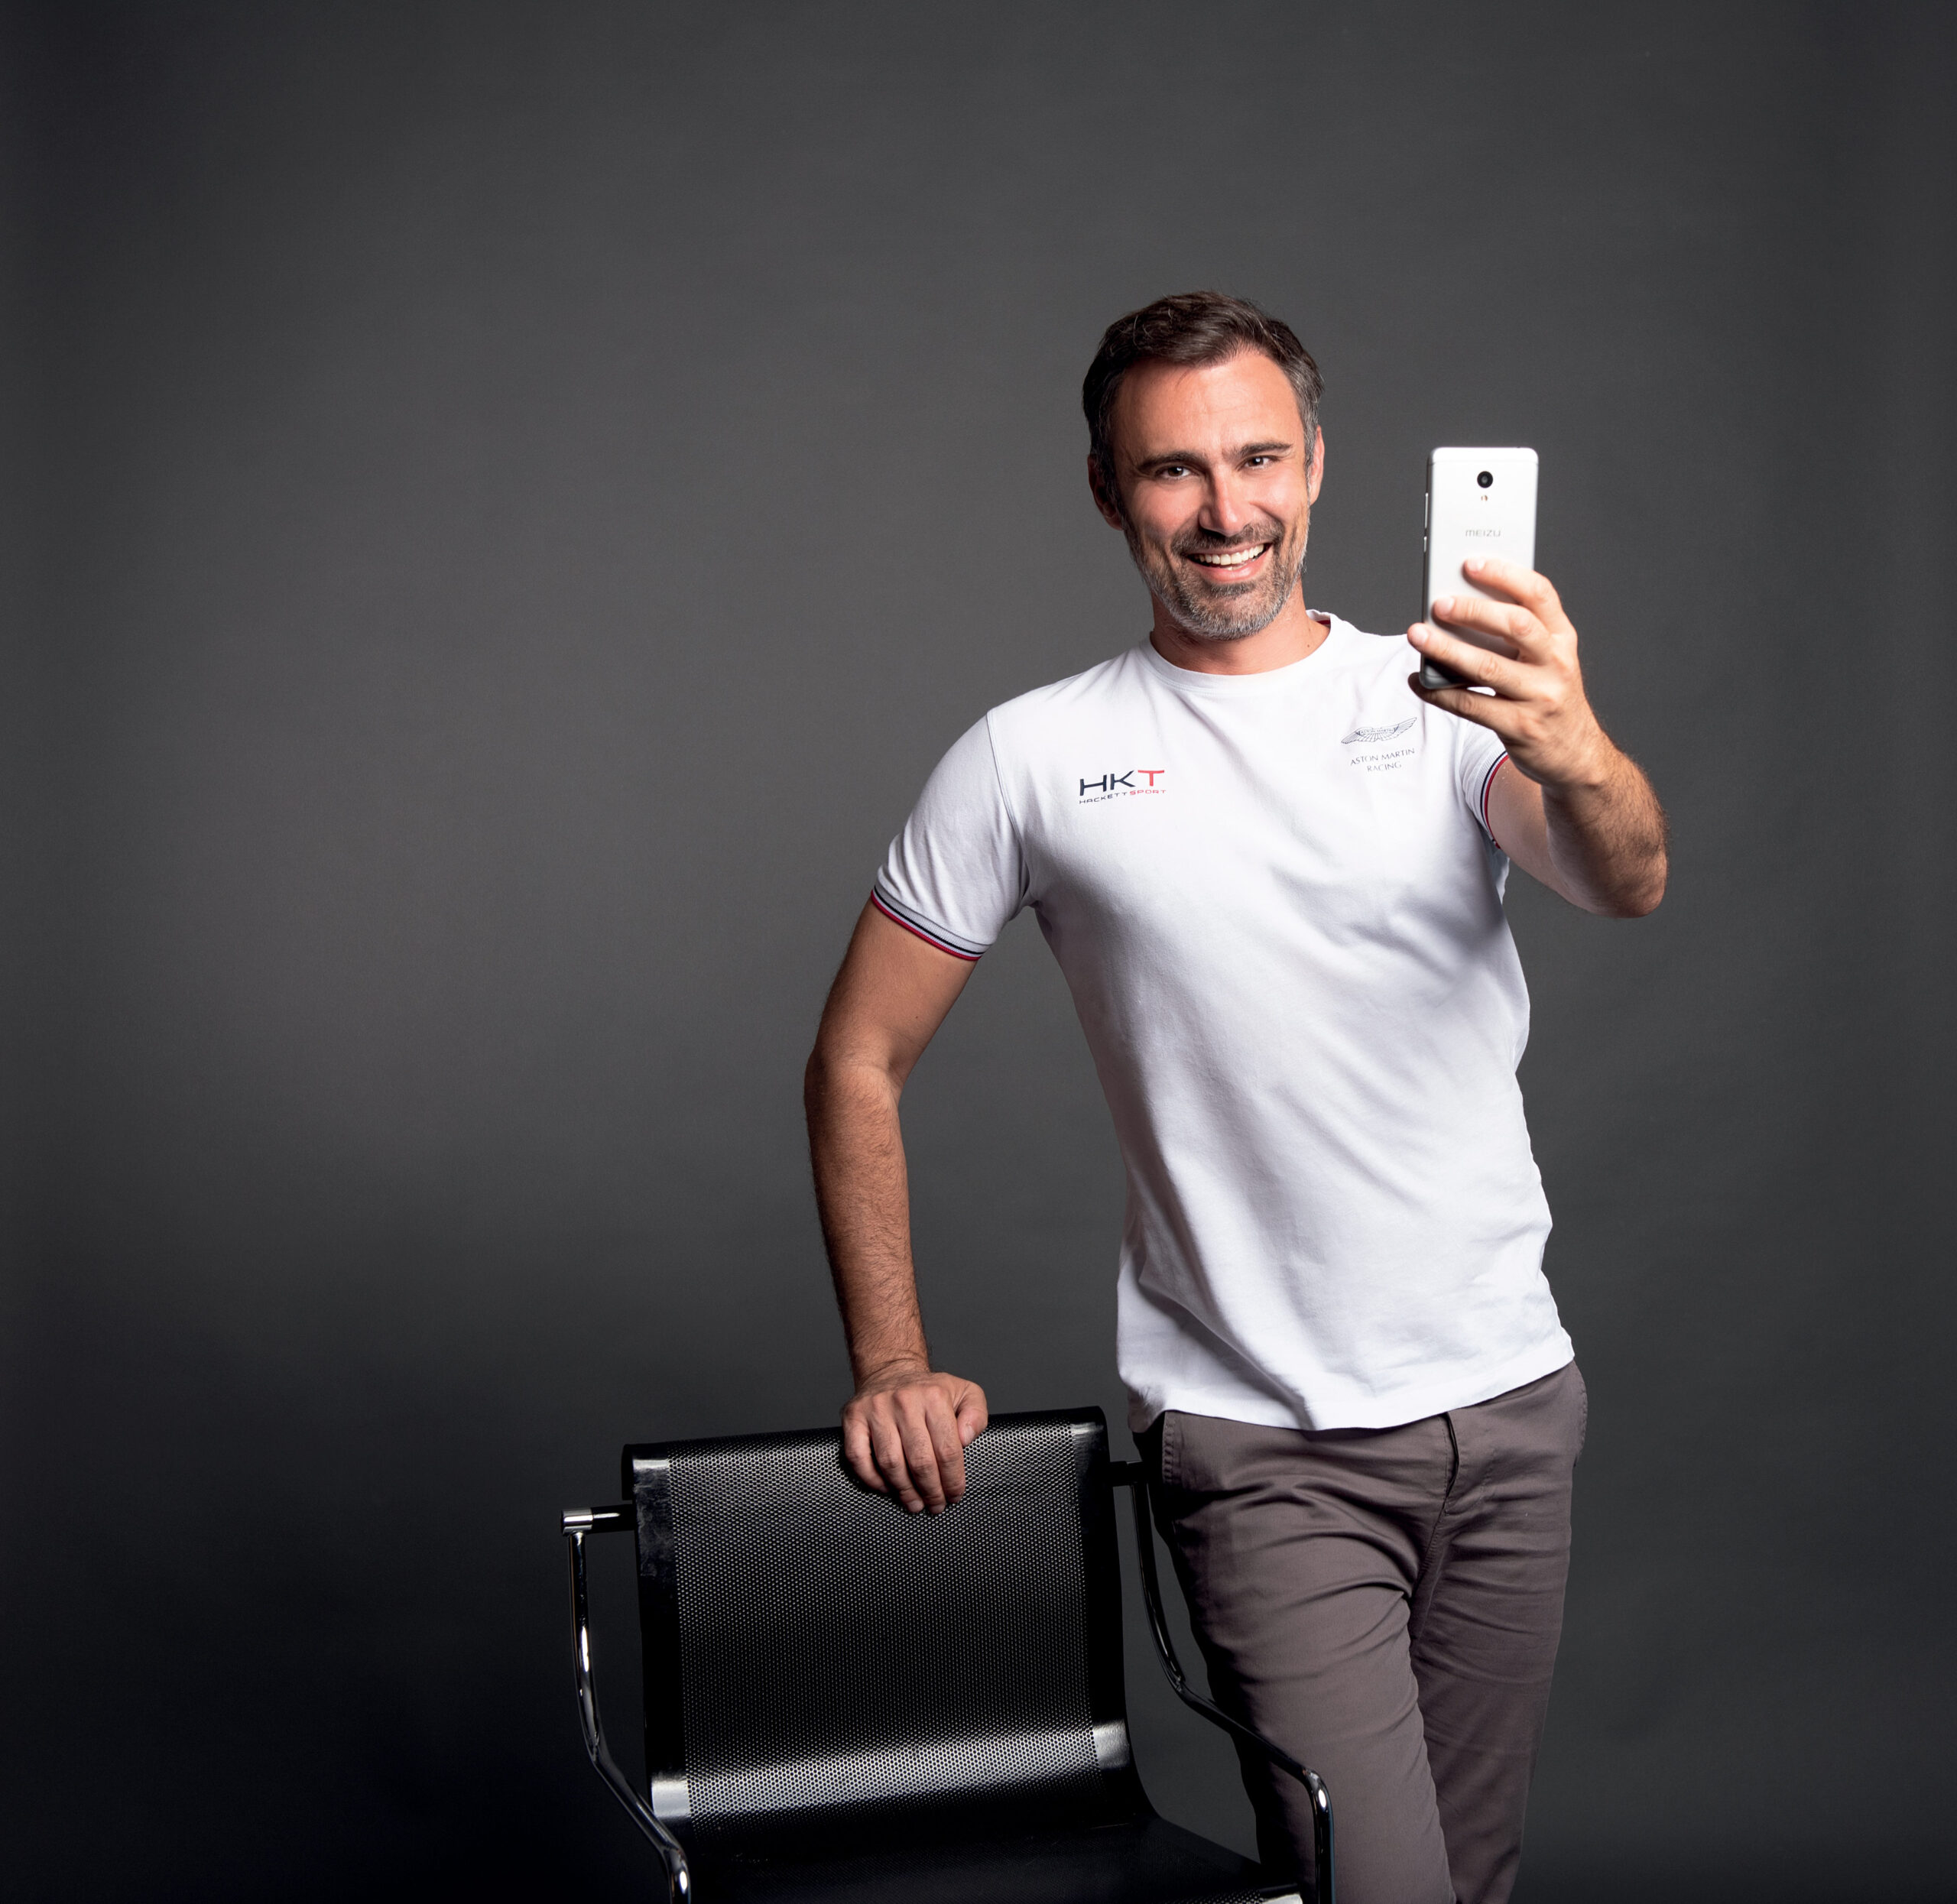 O Γιώργος Καπουτζίδης είναι ο social media ambassador των smartphones Meizu στην πιο επιτυχημένη συνεργασία του brand